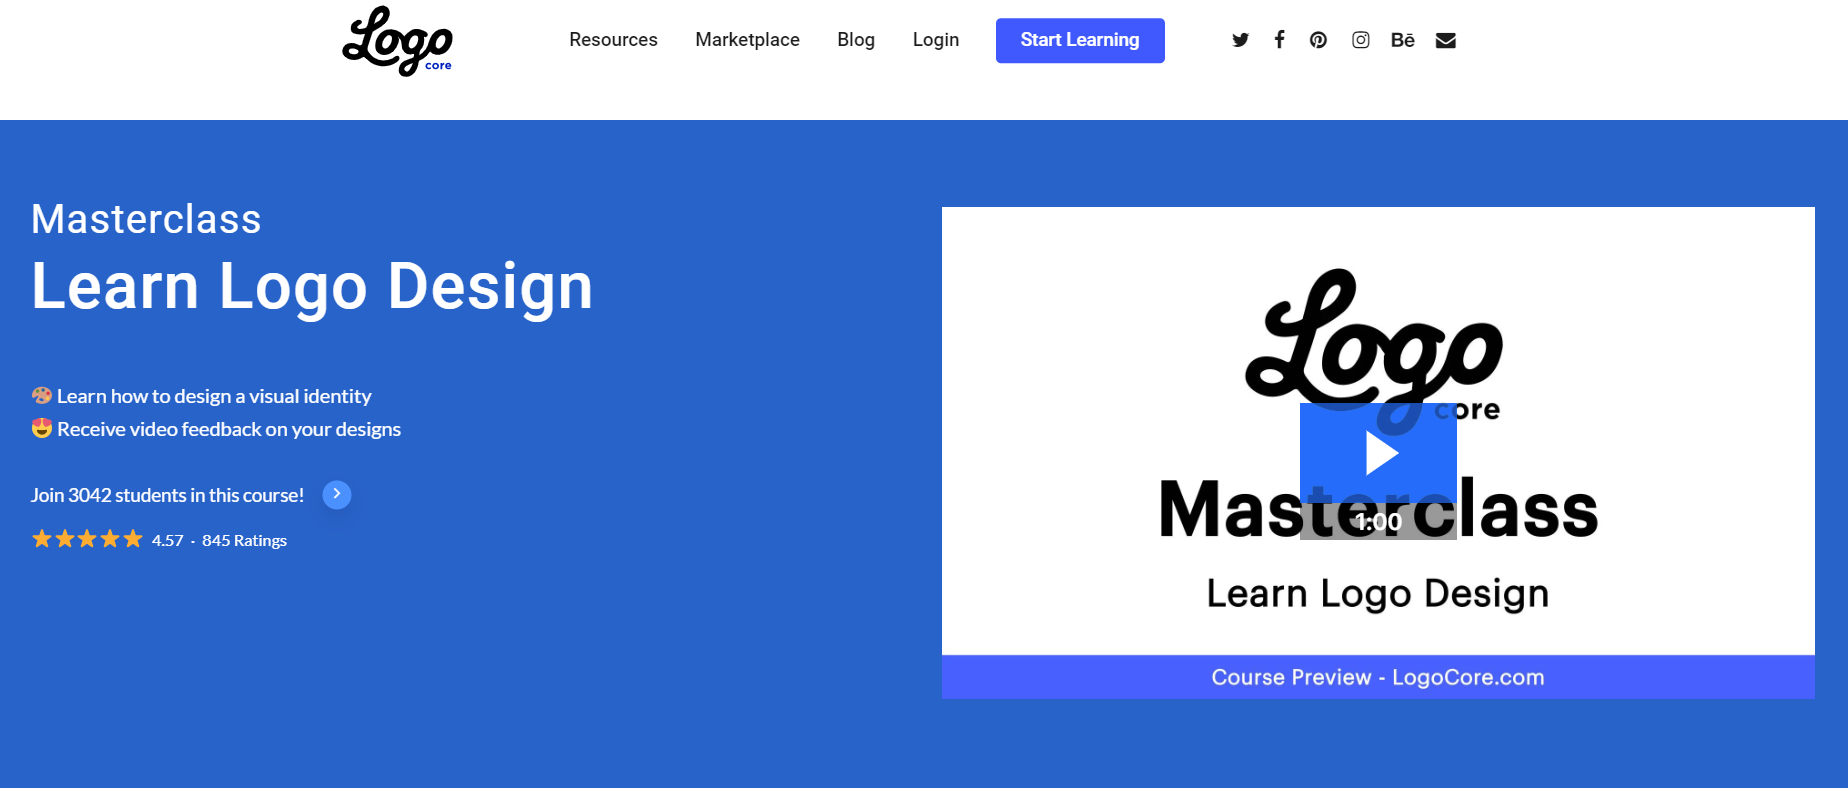 LogoCore - Learn Logo Design